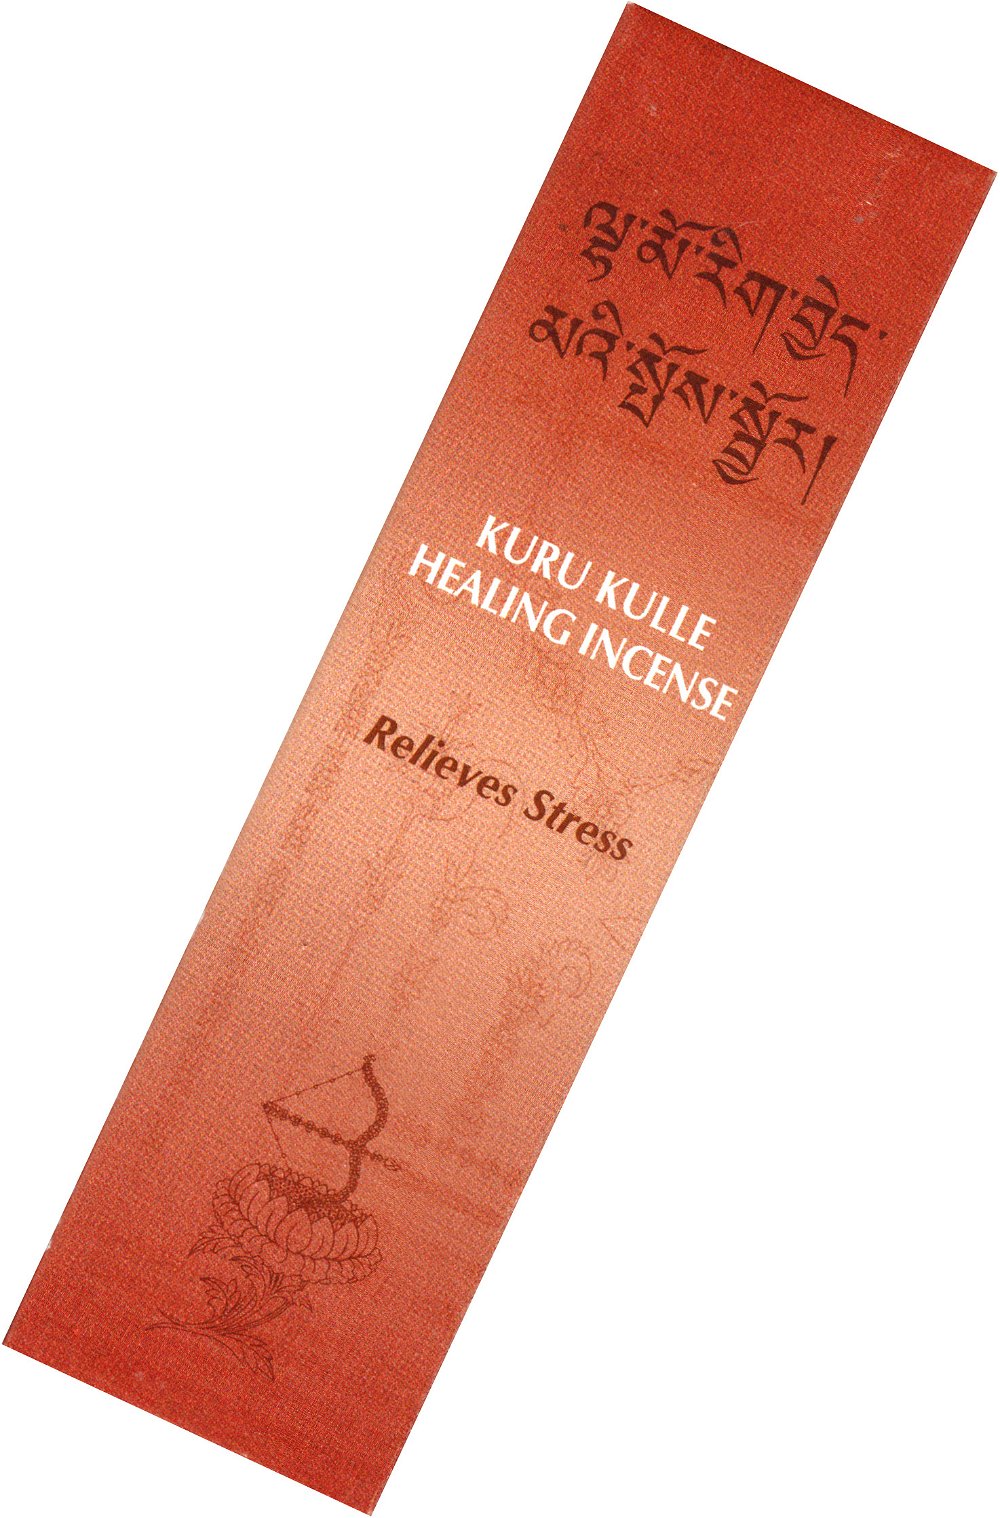 Благовоние Kurukulle Healing Incense (Курукулла), 20 палочек по 14 см, 20, Курукулла